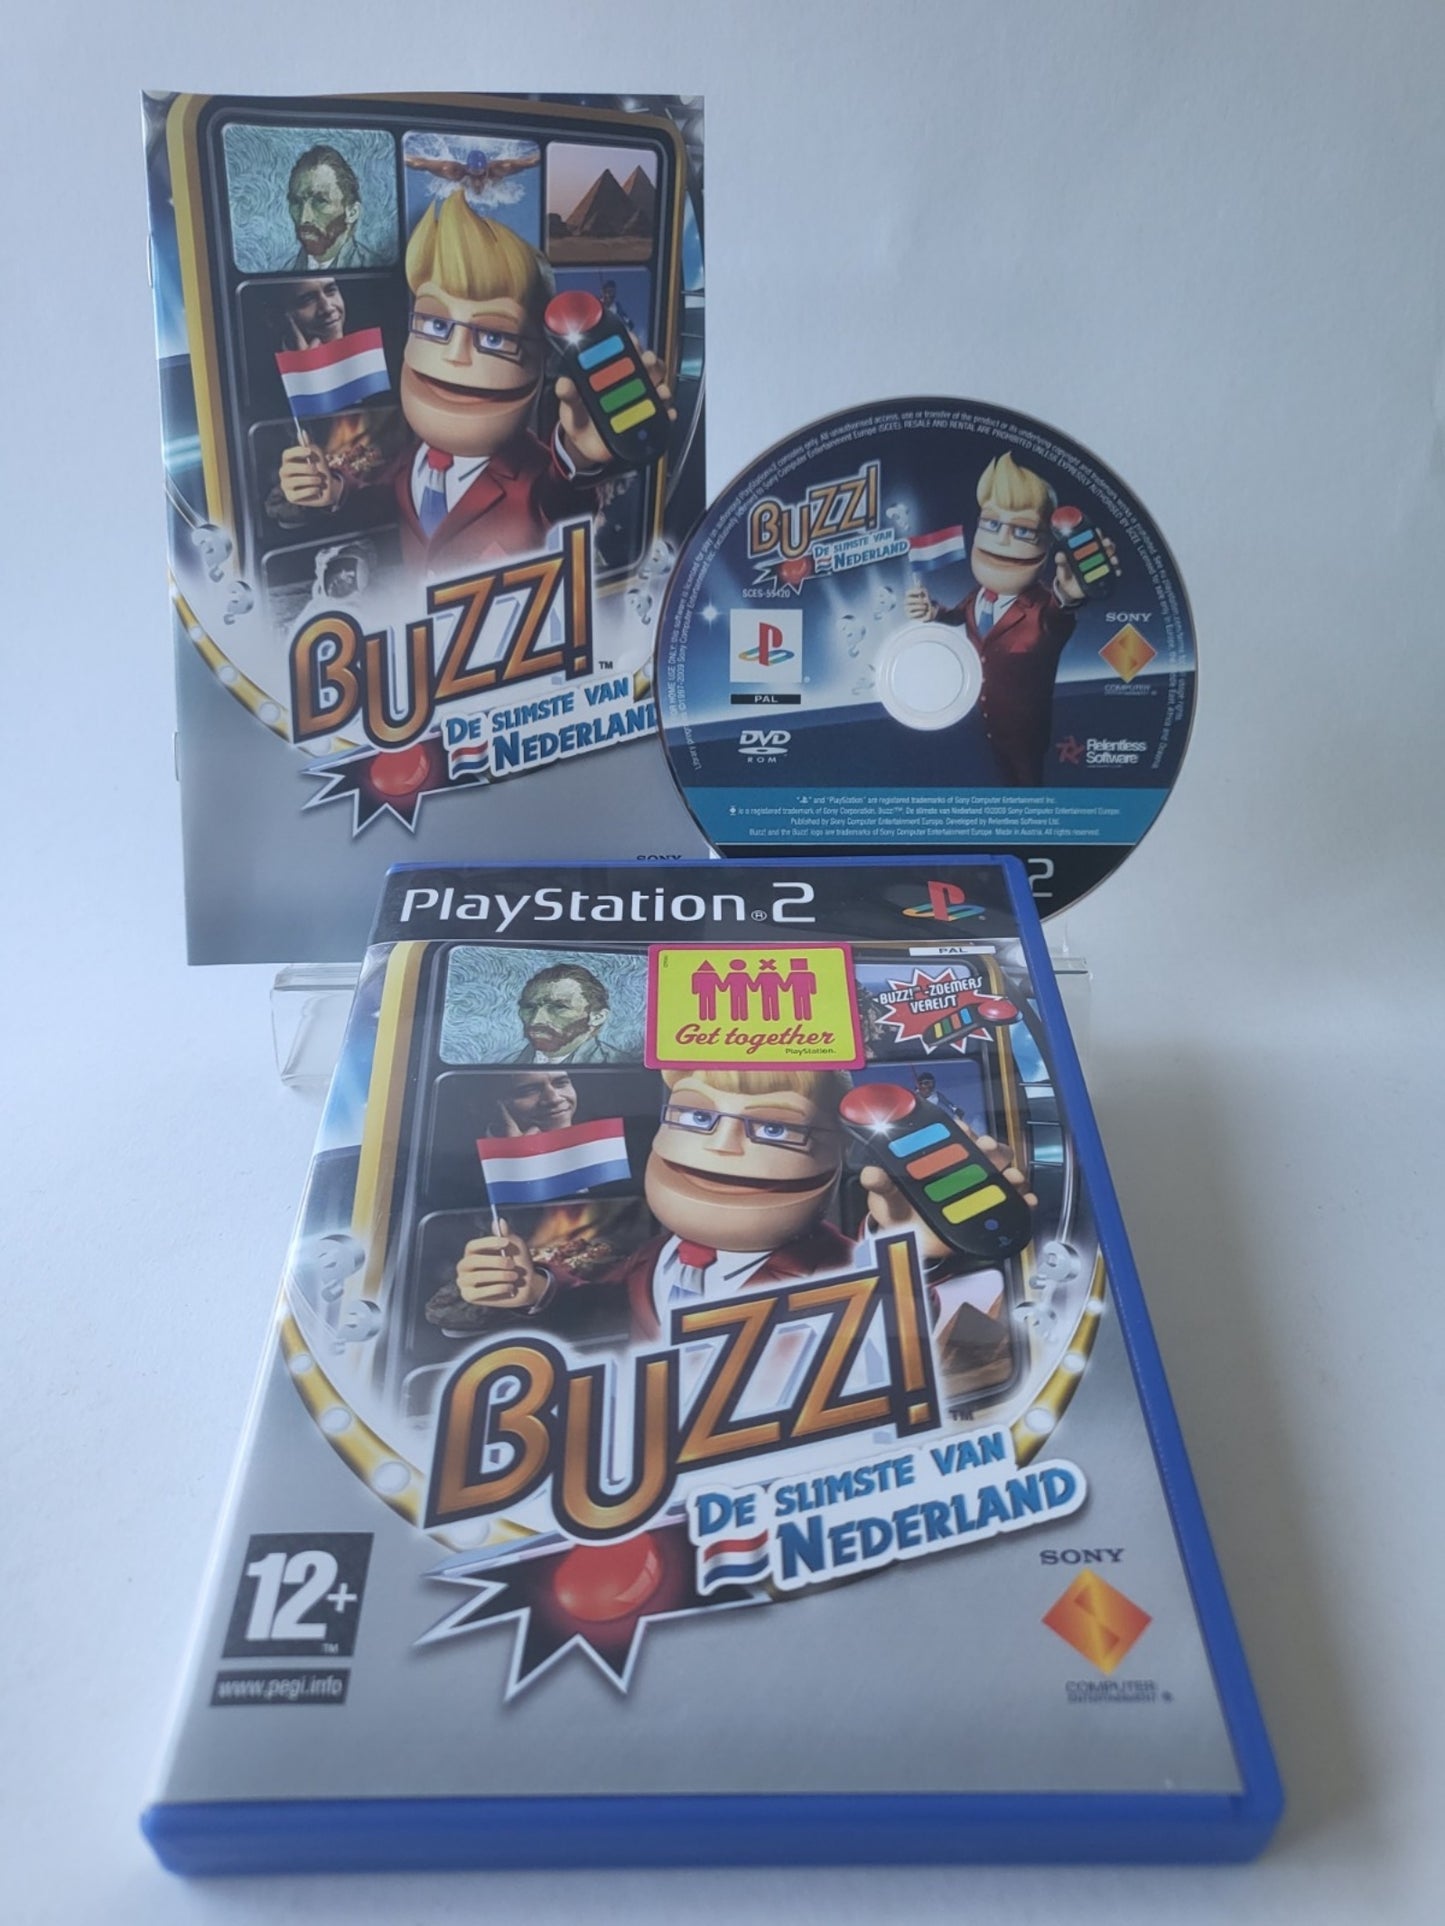 Buzz de Slimste van Nederland Playstation 2